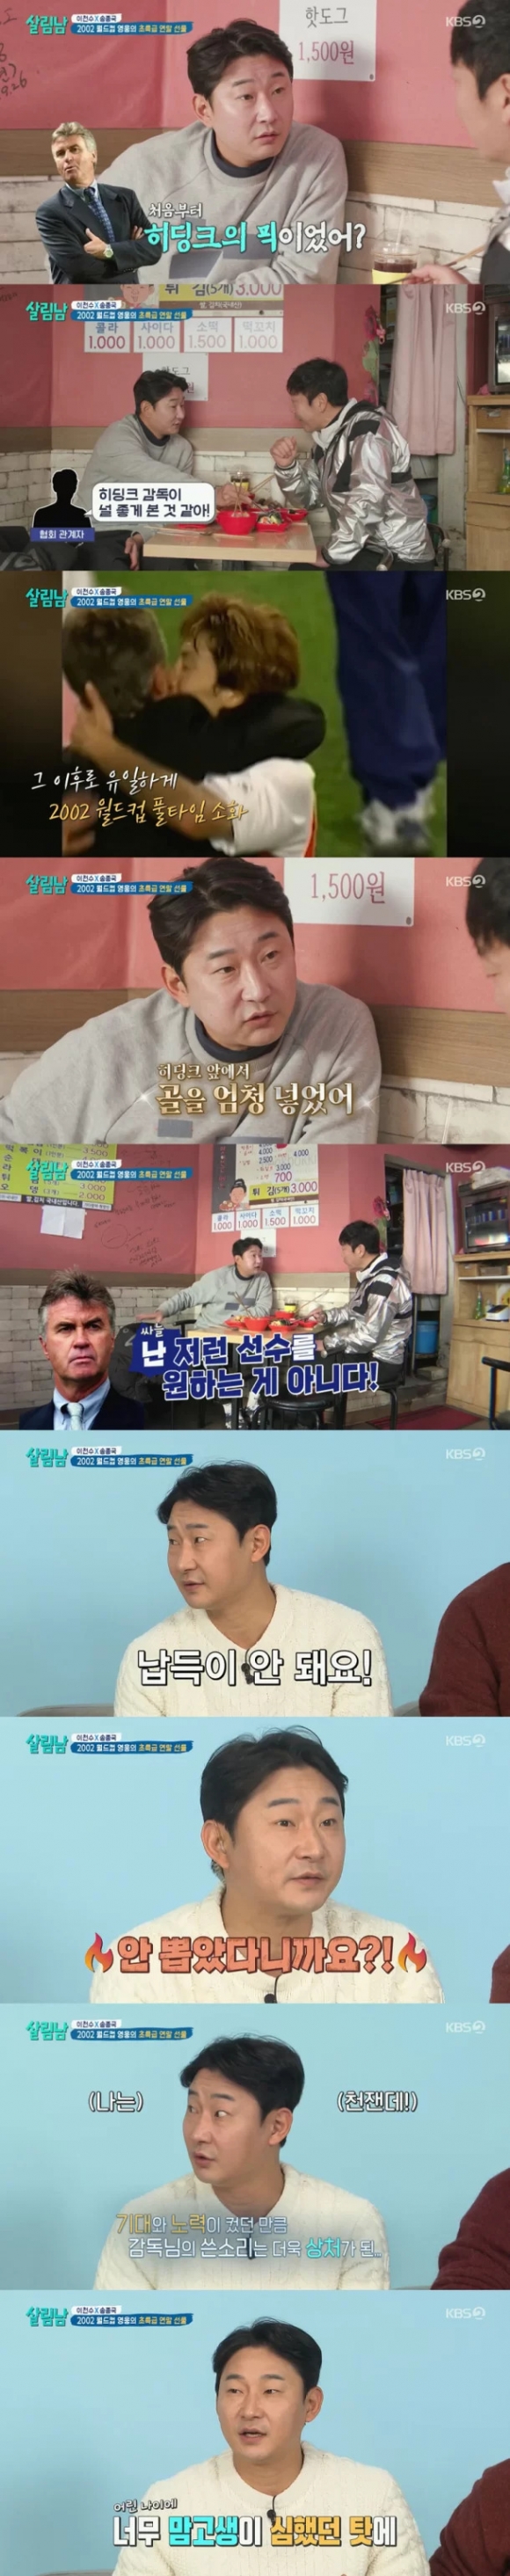 KBS 2TV 예능프로그램 ‘살림하는 남자들 2’ 캡처